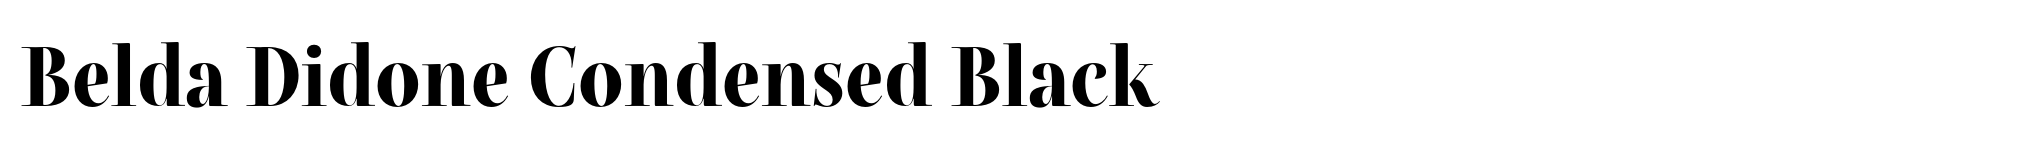 Belda Didone Condensed Black image